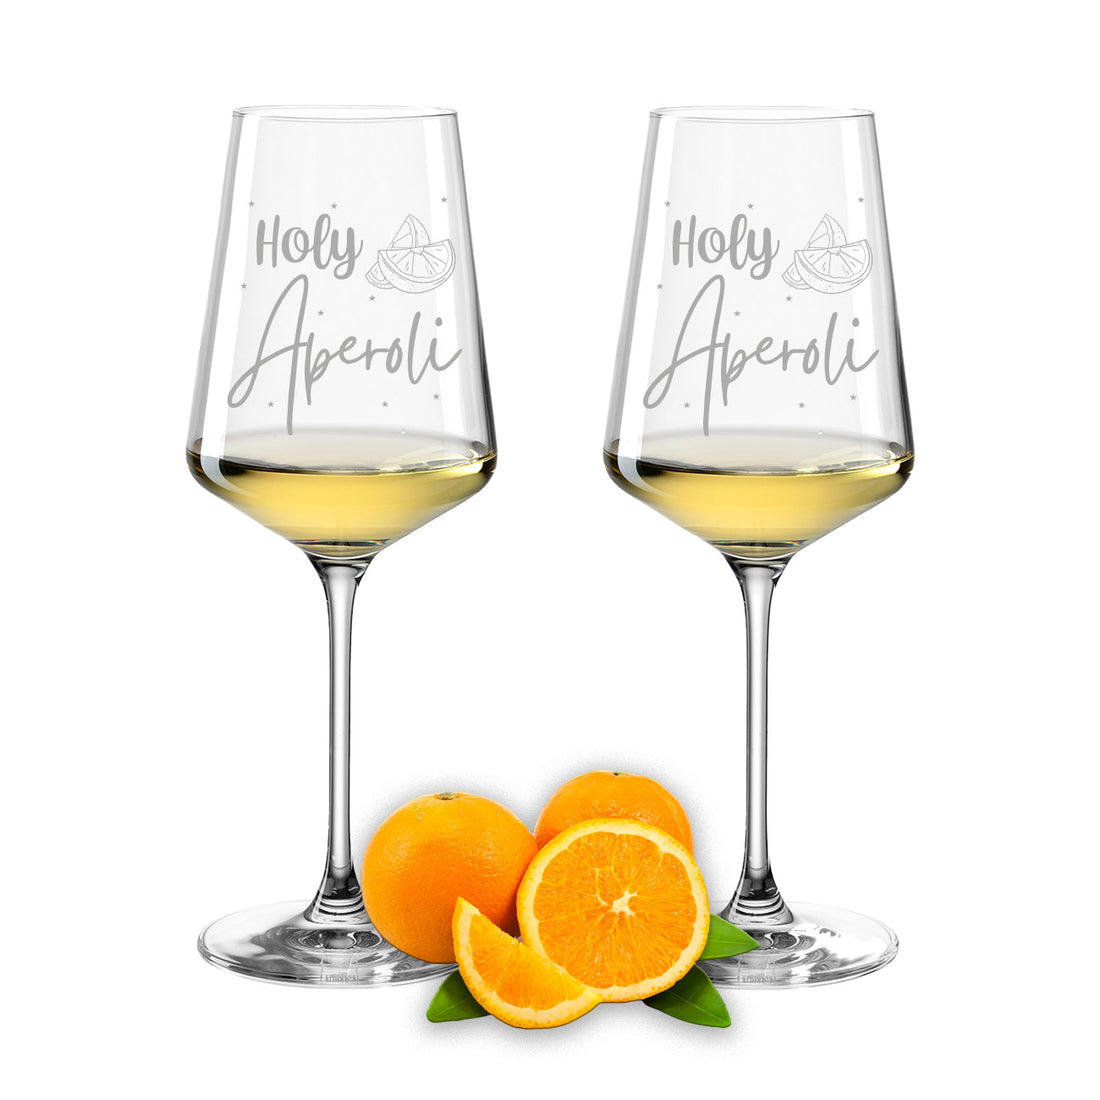 Weinglas mit Gravur Leonardo Puccini "HOLY APEROLI" 2 Gläser